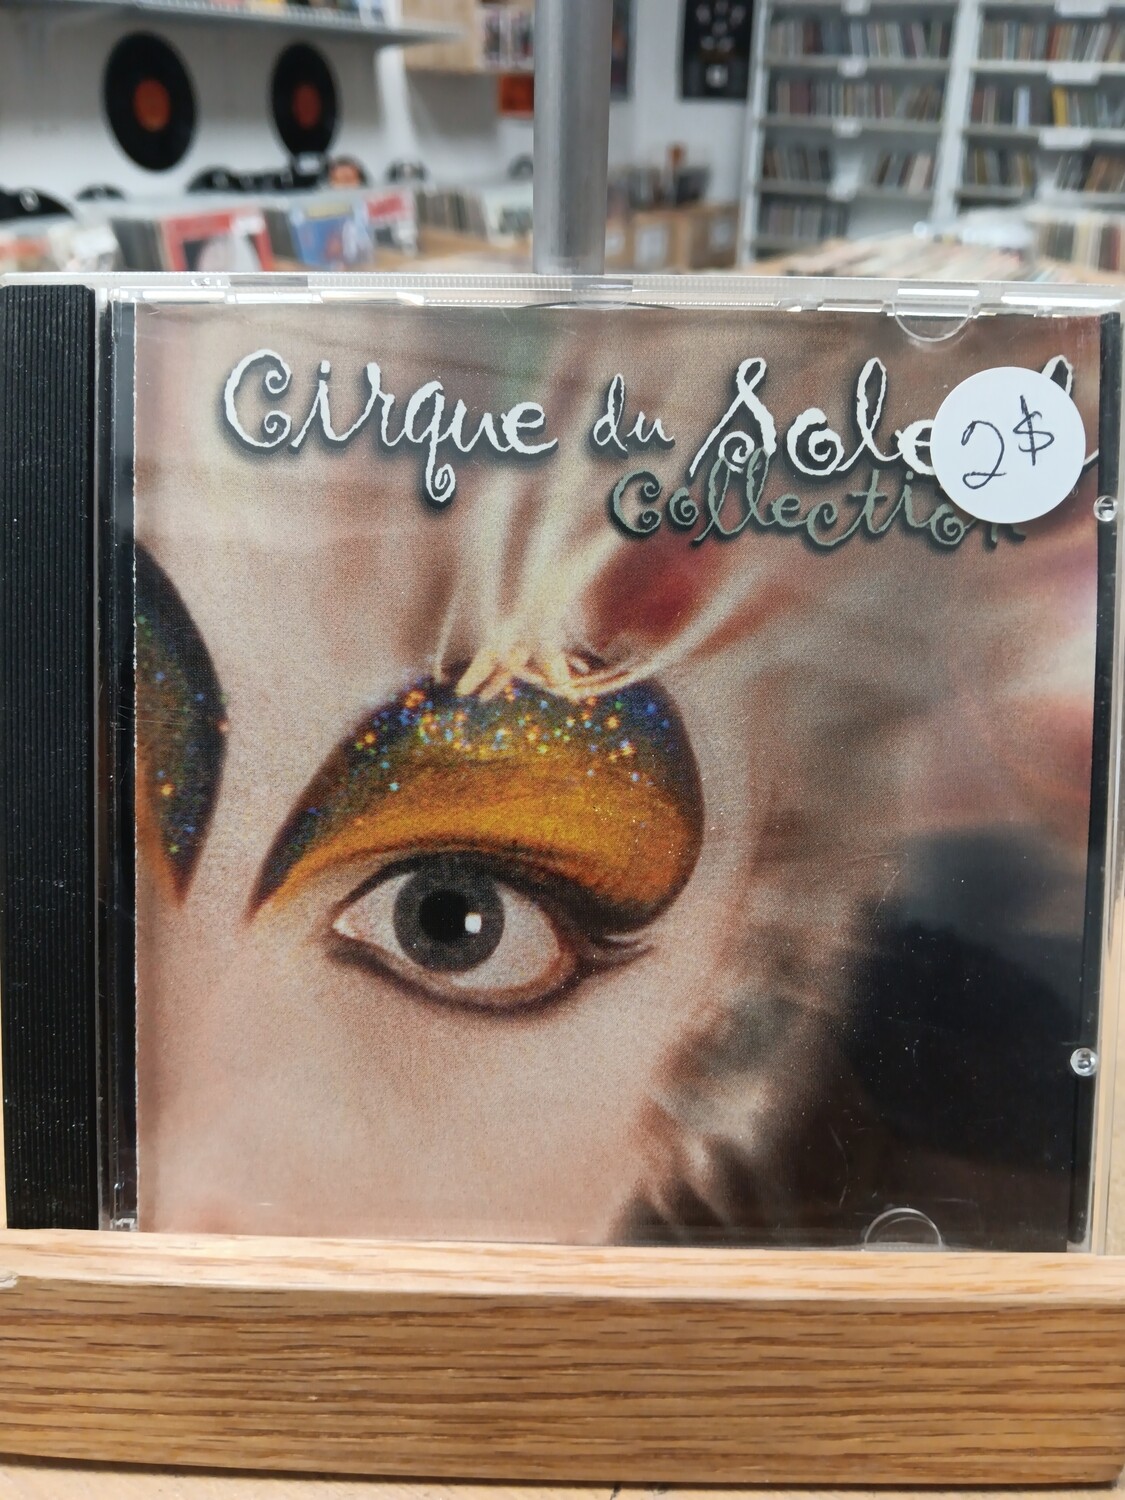 VARIOUS - Cirque du soleil collection (CD)